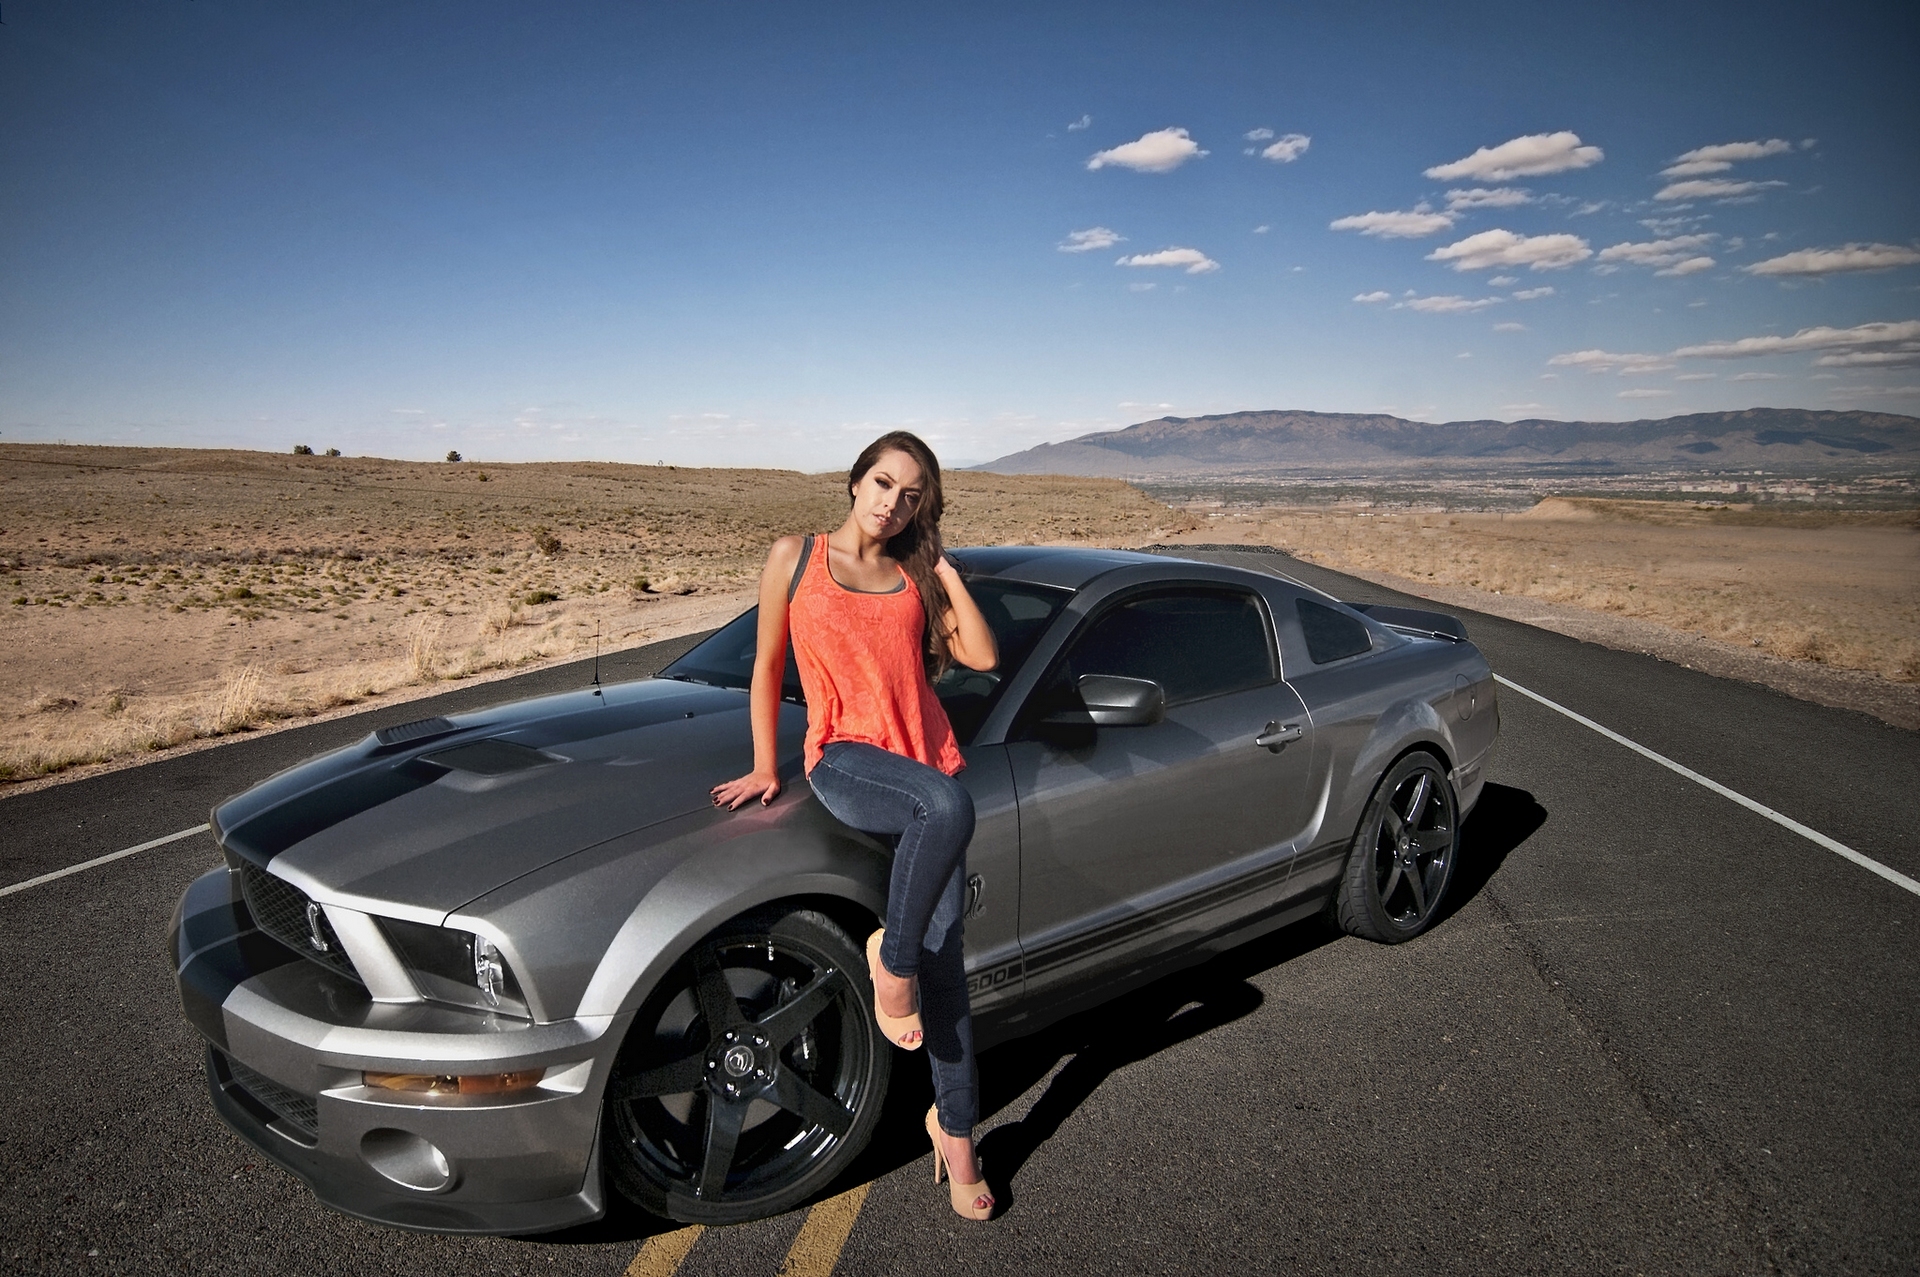 Ford Mustang Shelby GT500 Серый Автомобили Девушки фото авто, машины, машин...